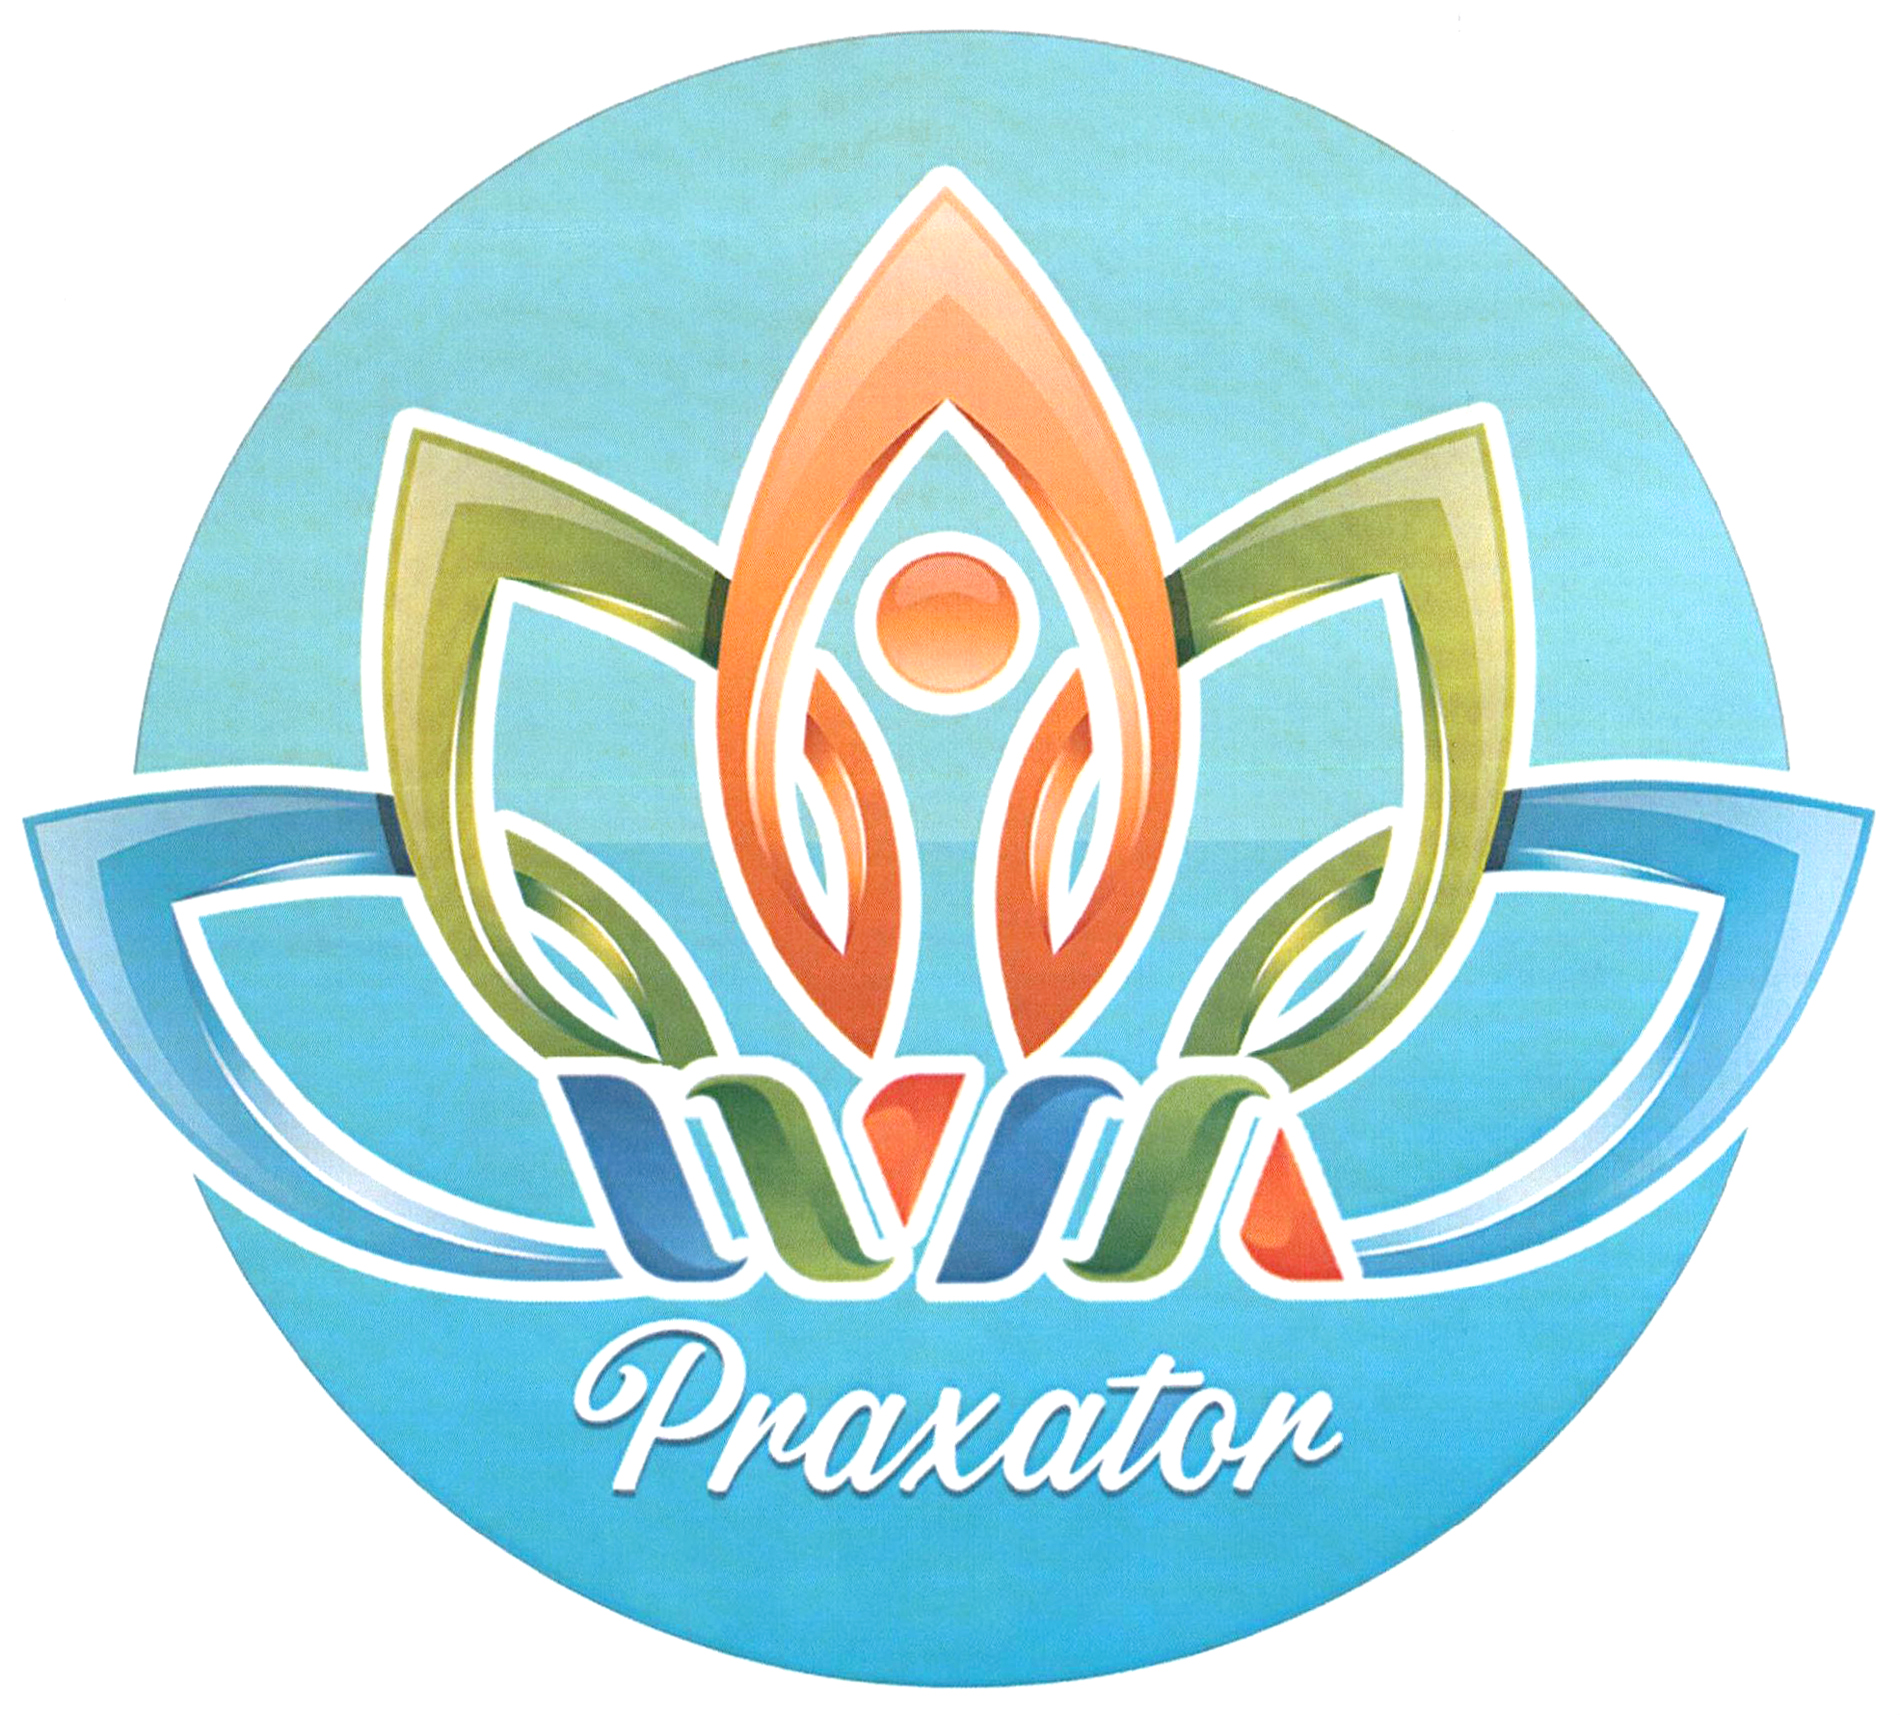 Praxator